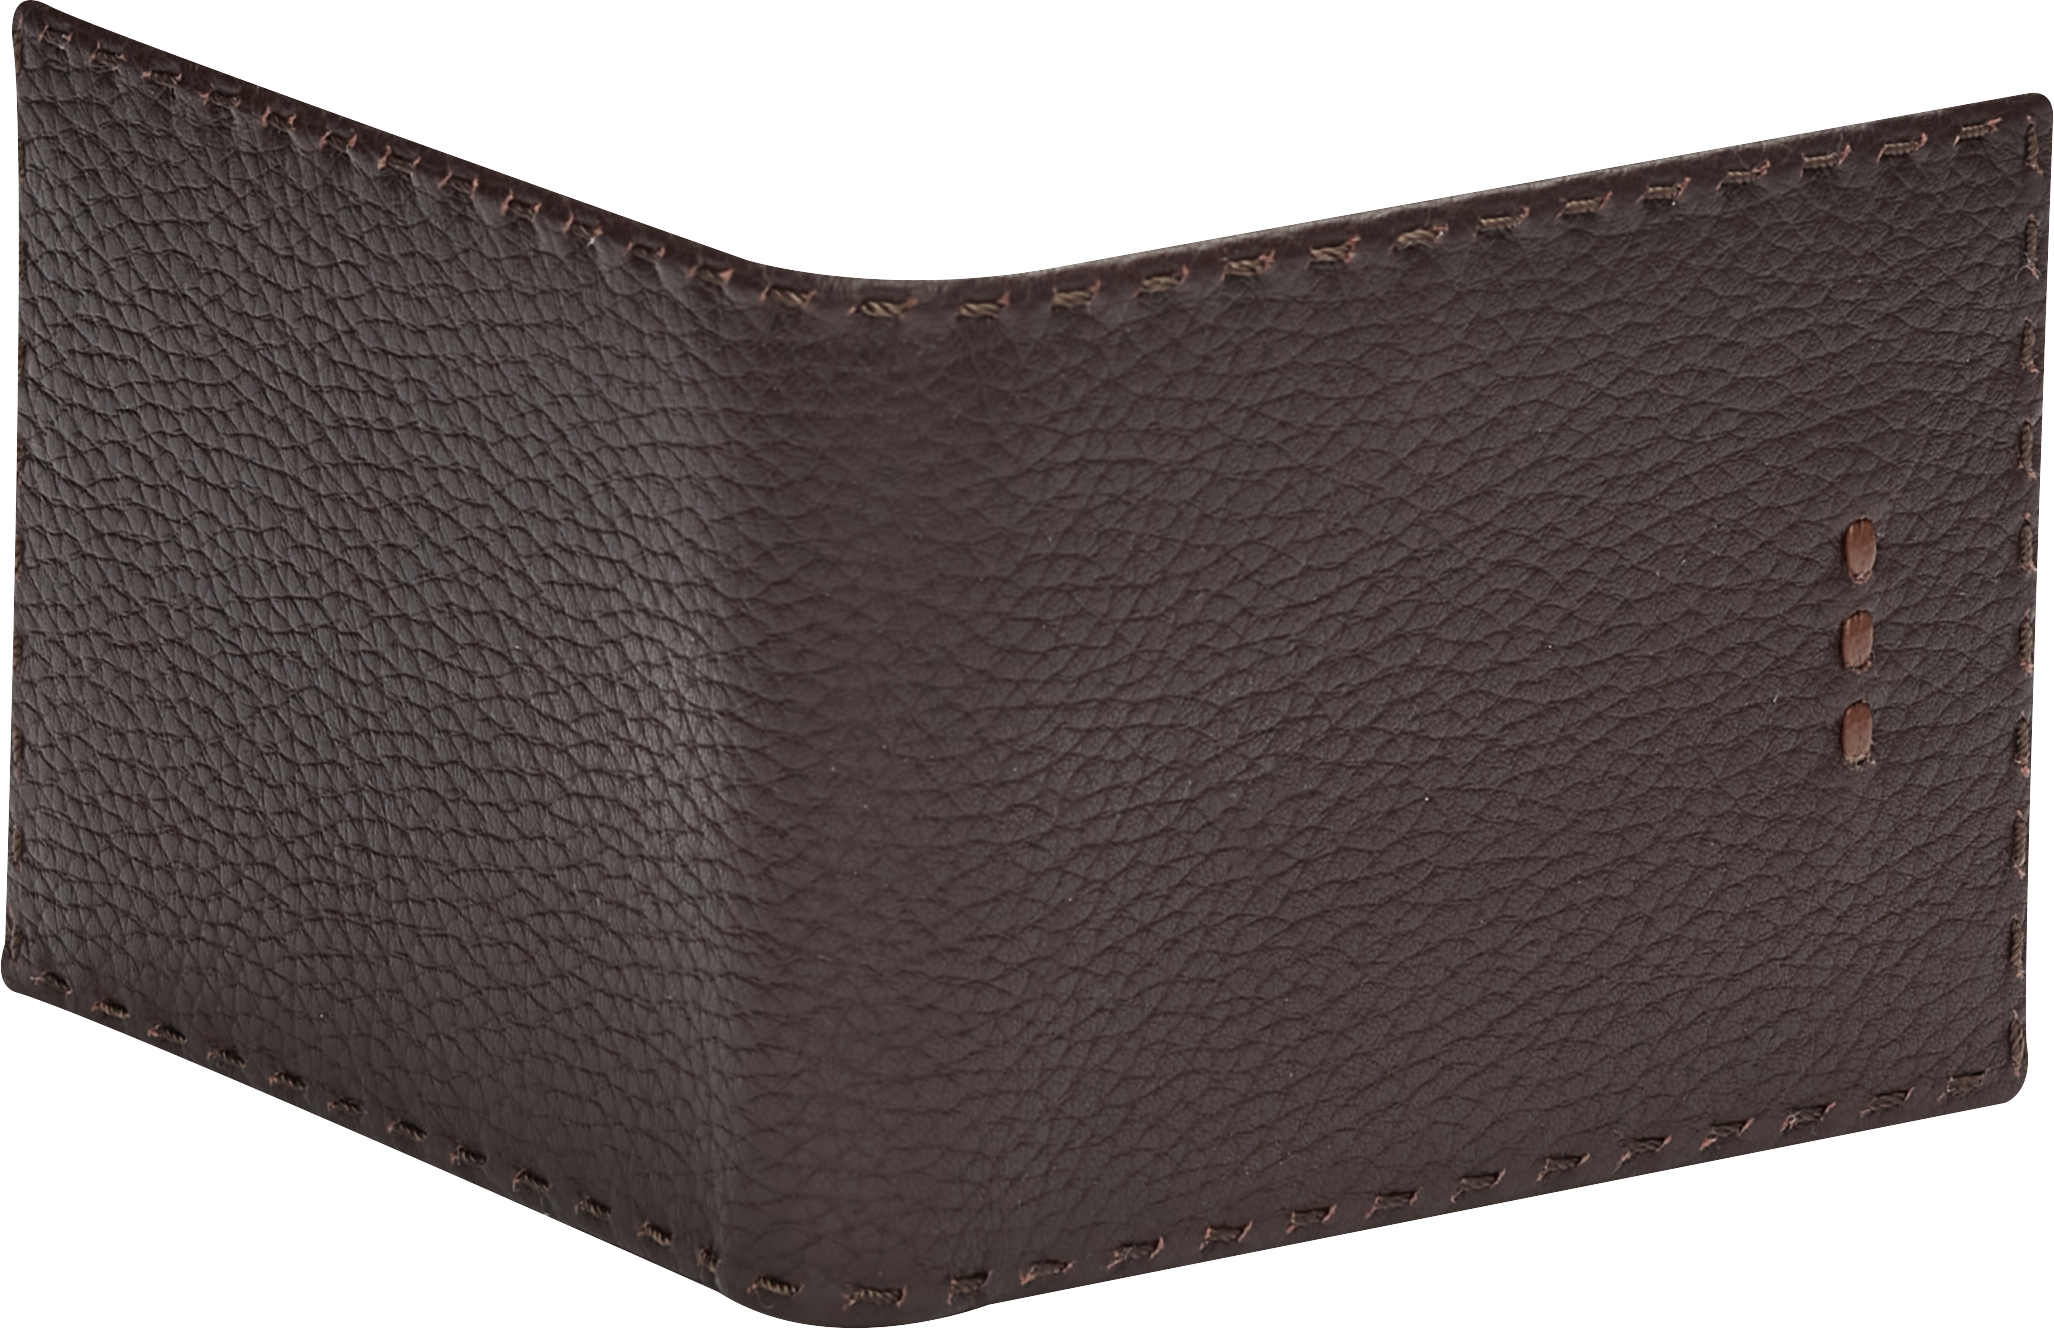 Bi-Fold Pebbled Leather Wallet